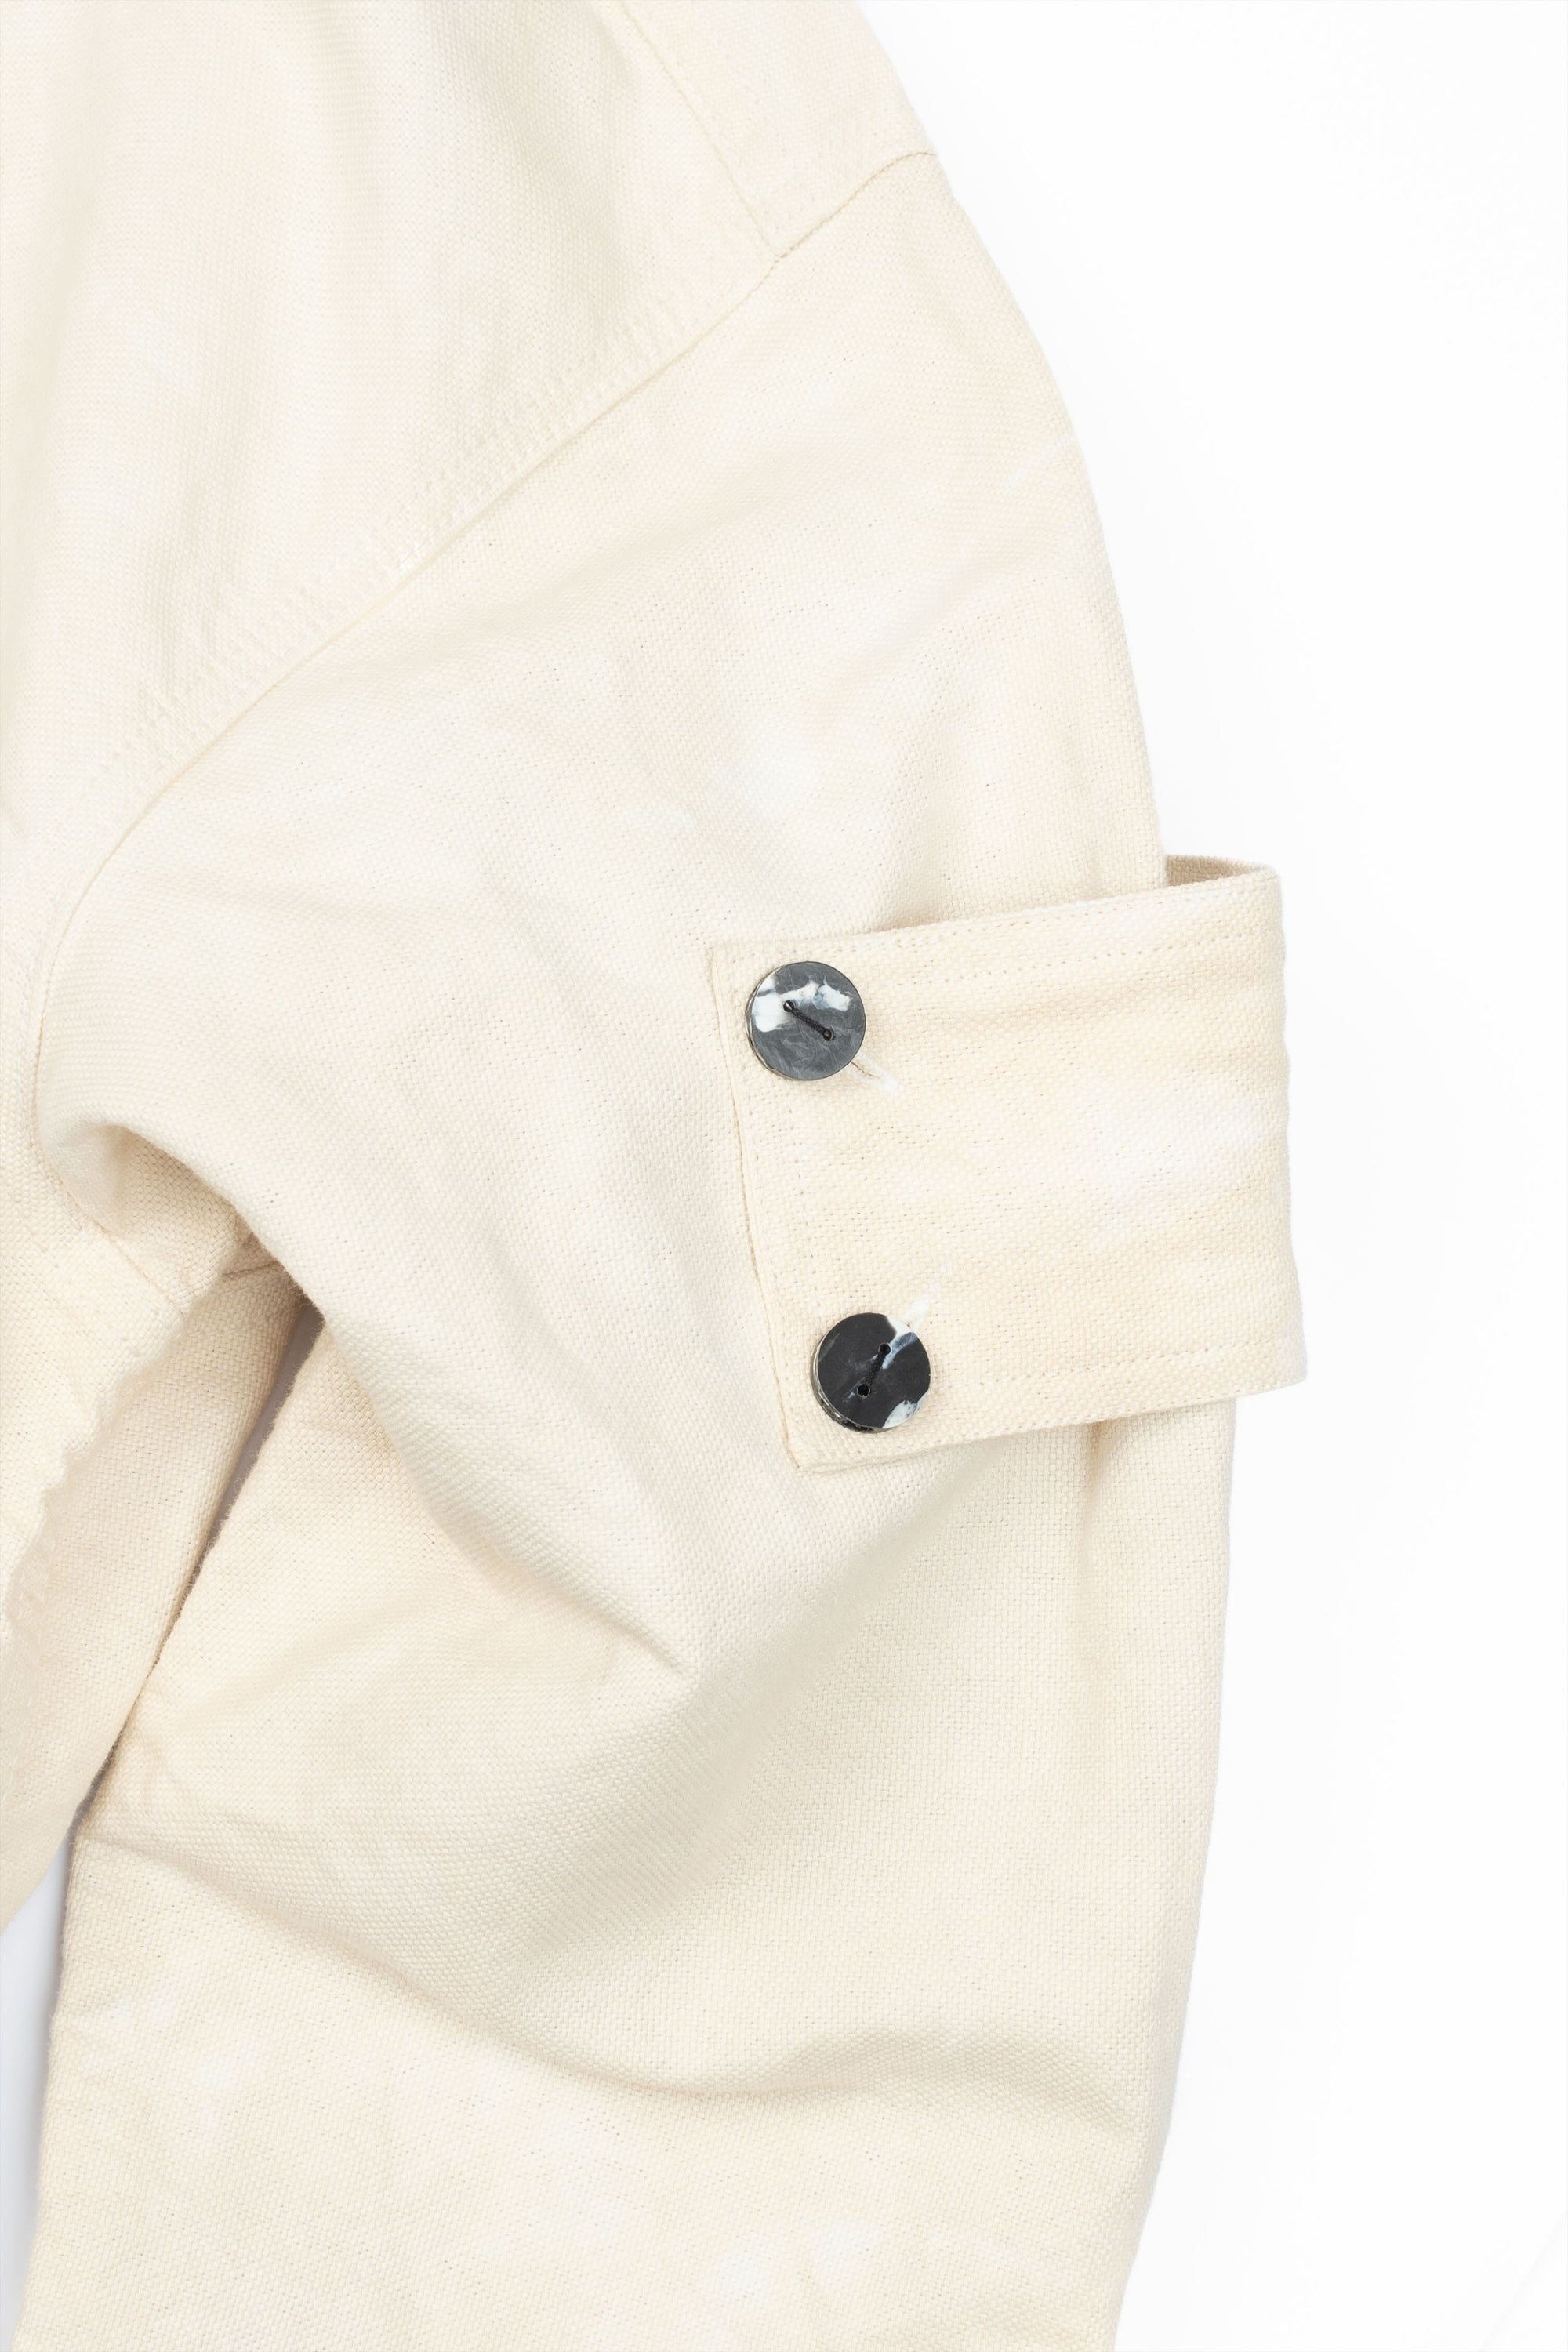 Recraft Walk Wear 001 - Hooded Pullover White